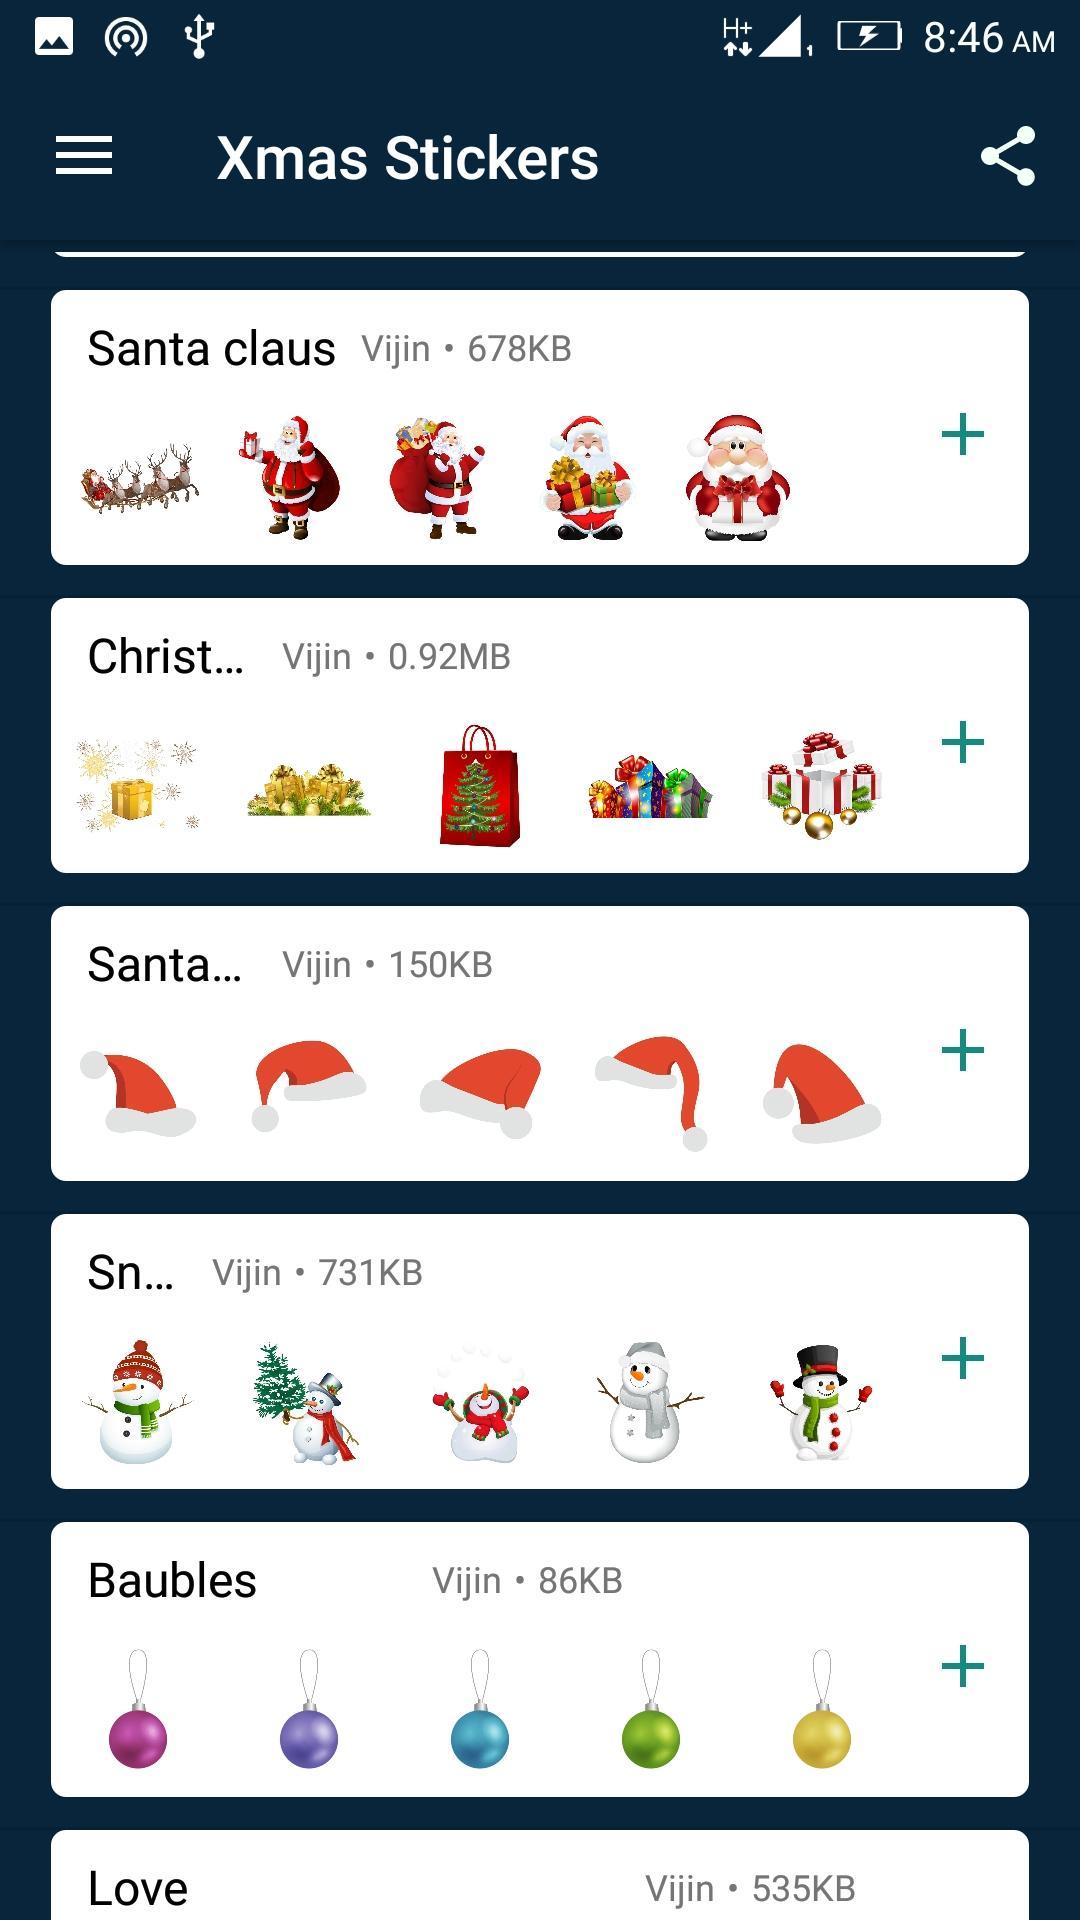 Mus Niet ingewikkeld Omringd New Year whatsapp stickers for Android - APK Download